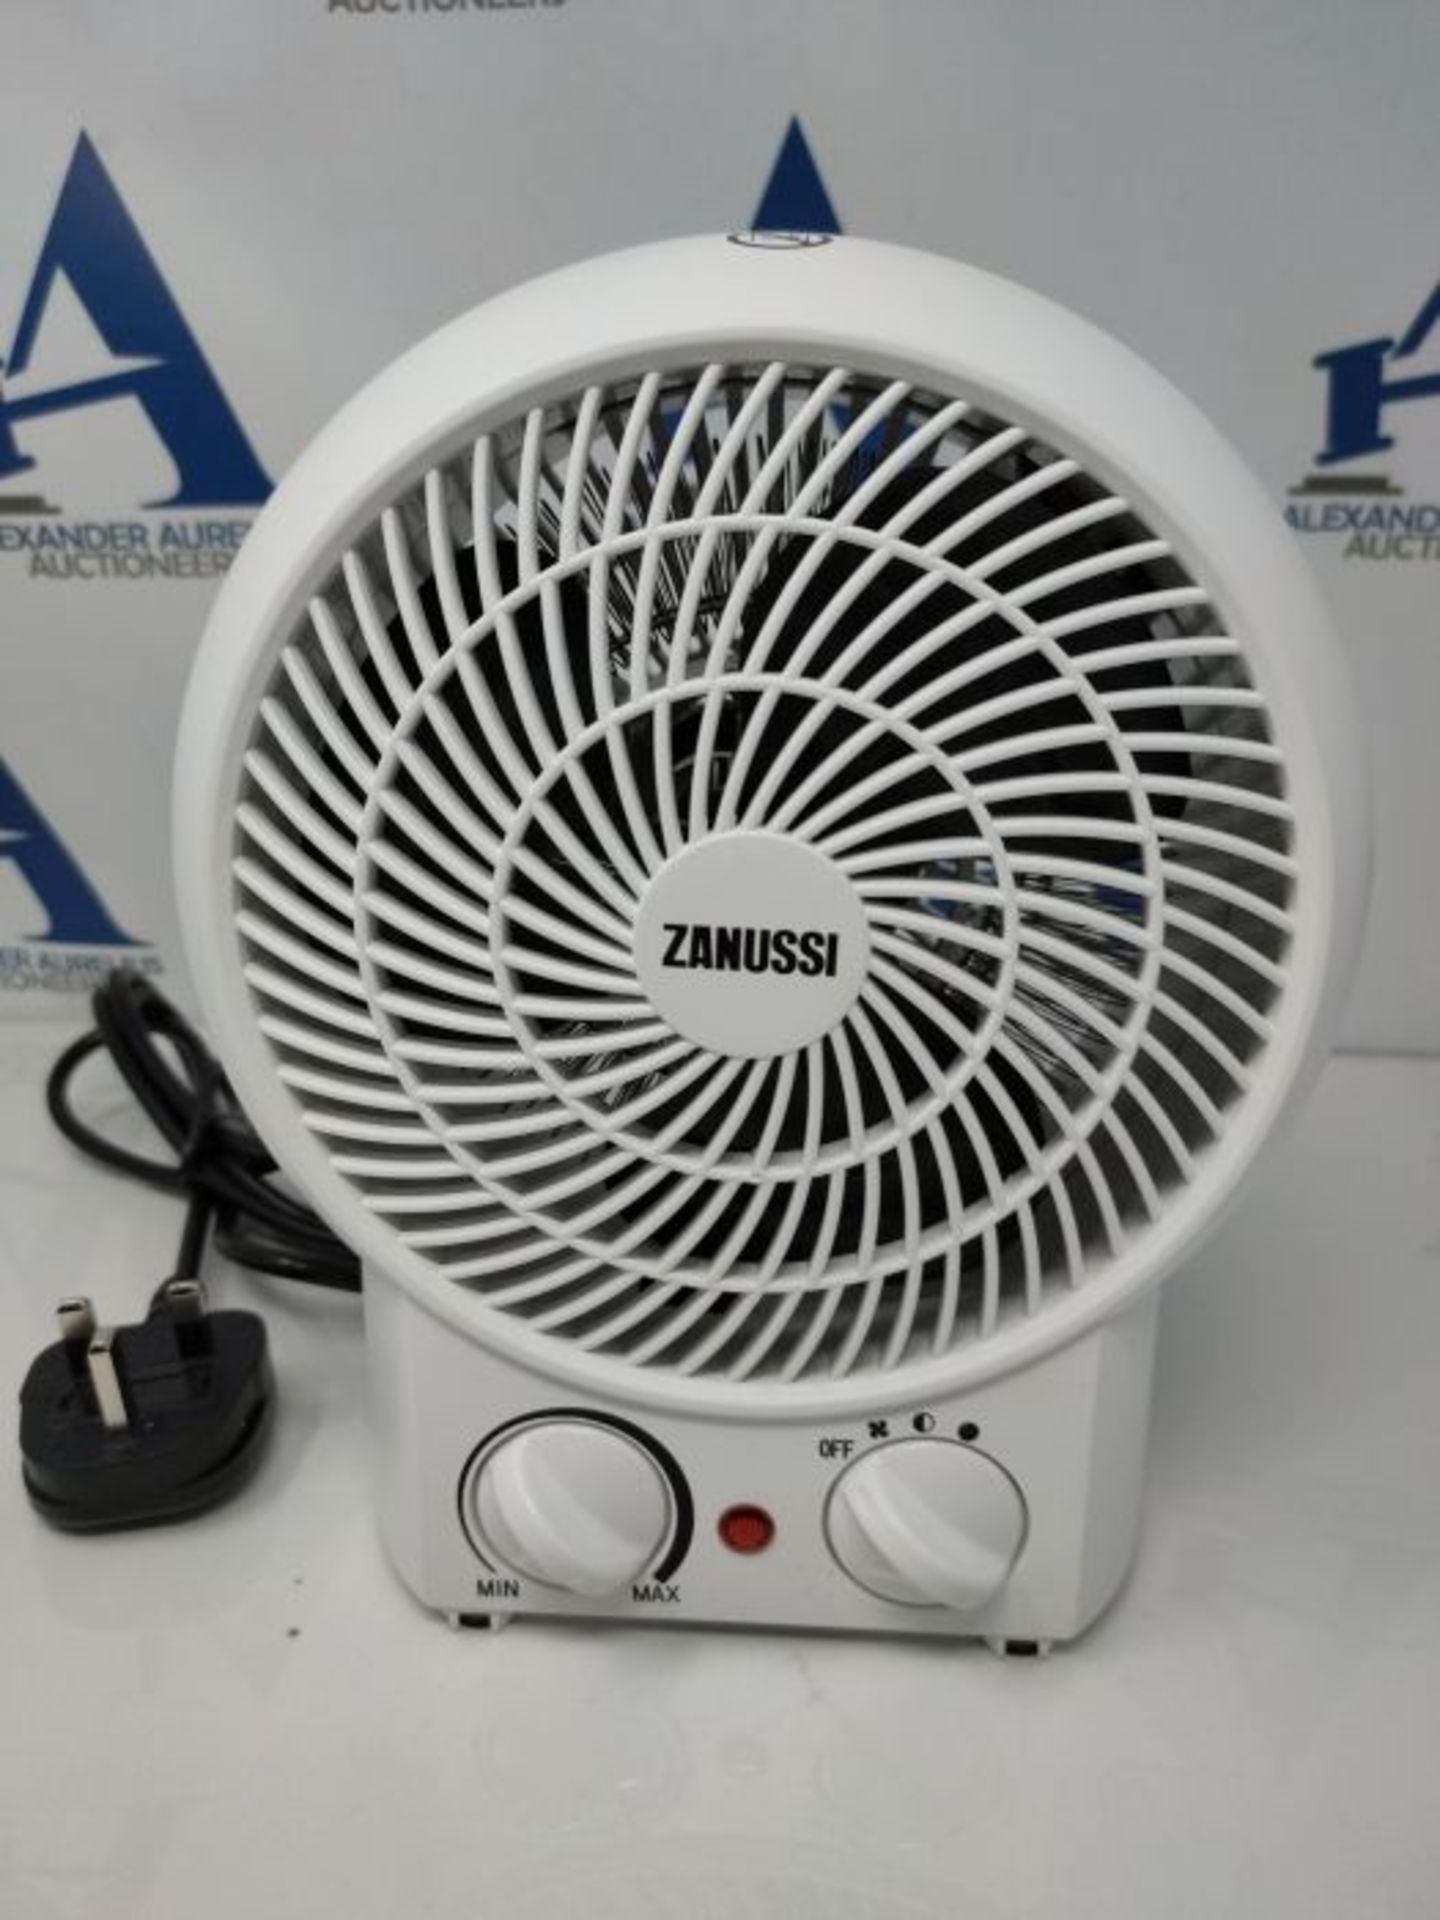 Zanussi ZFH1001 2000W Portable Upright Fan Heater, Two Heat Settings, Overheat Protect - Image 2 of 3